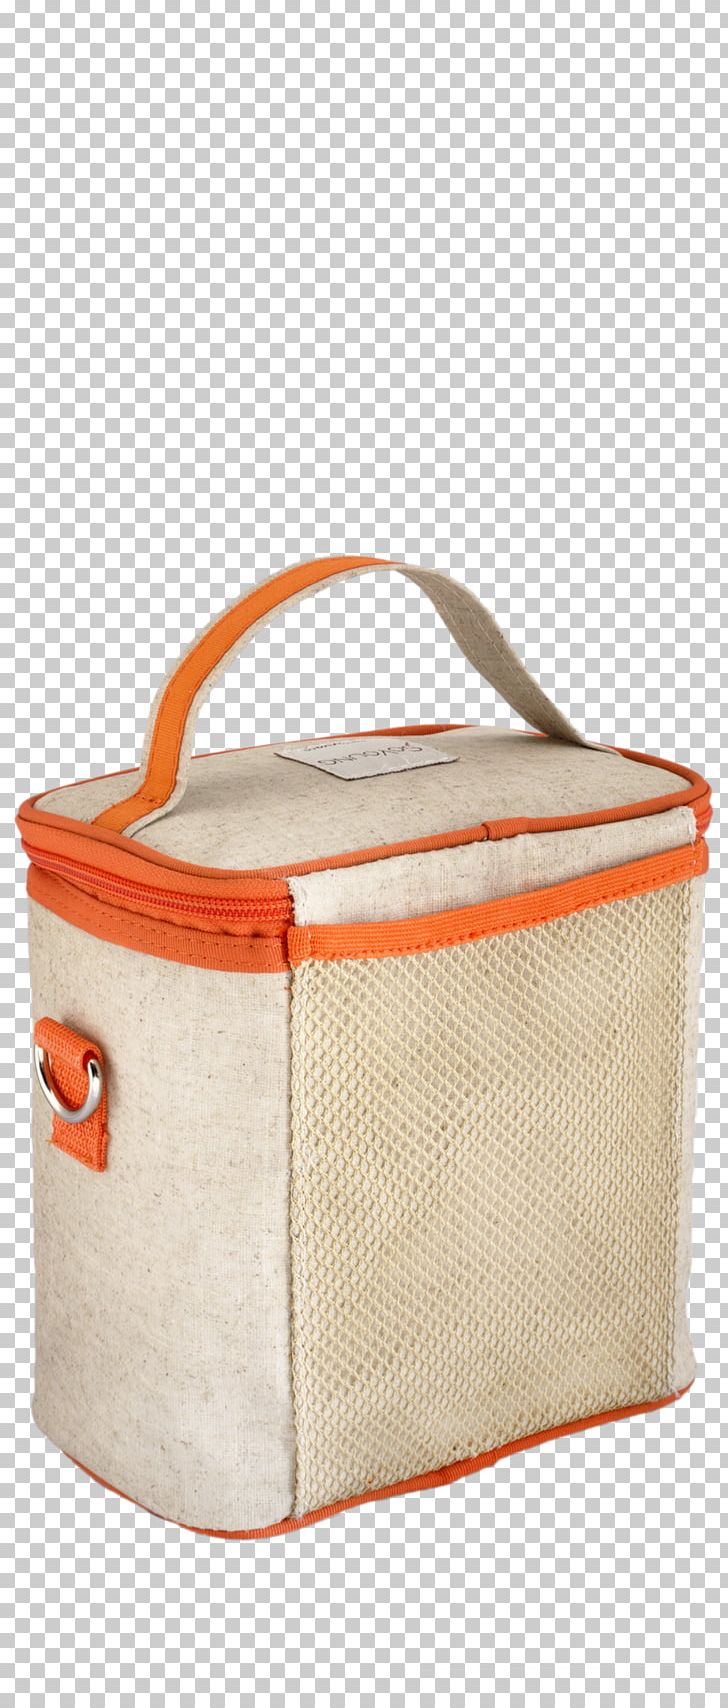 Cooler Thermal Bag Lunchbox Handbag PNG, Clipart, Accessories, Backpack, Bag, Beige, Box Free PNG Download